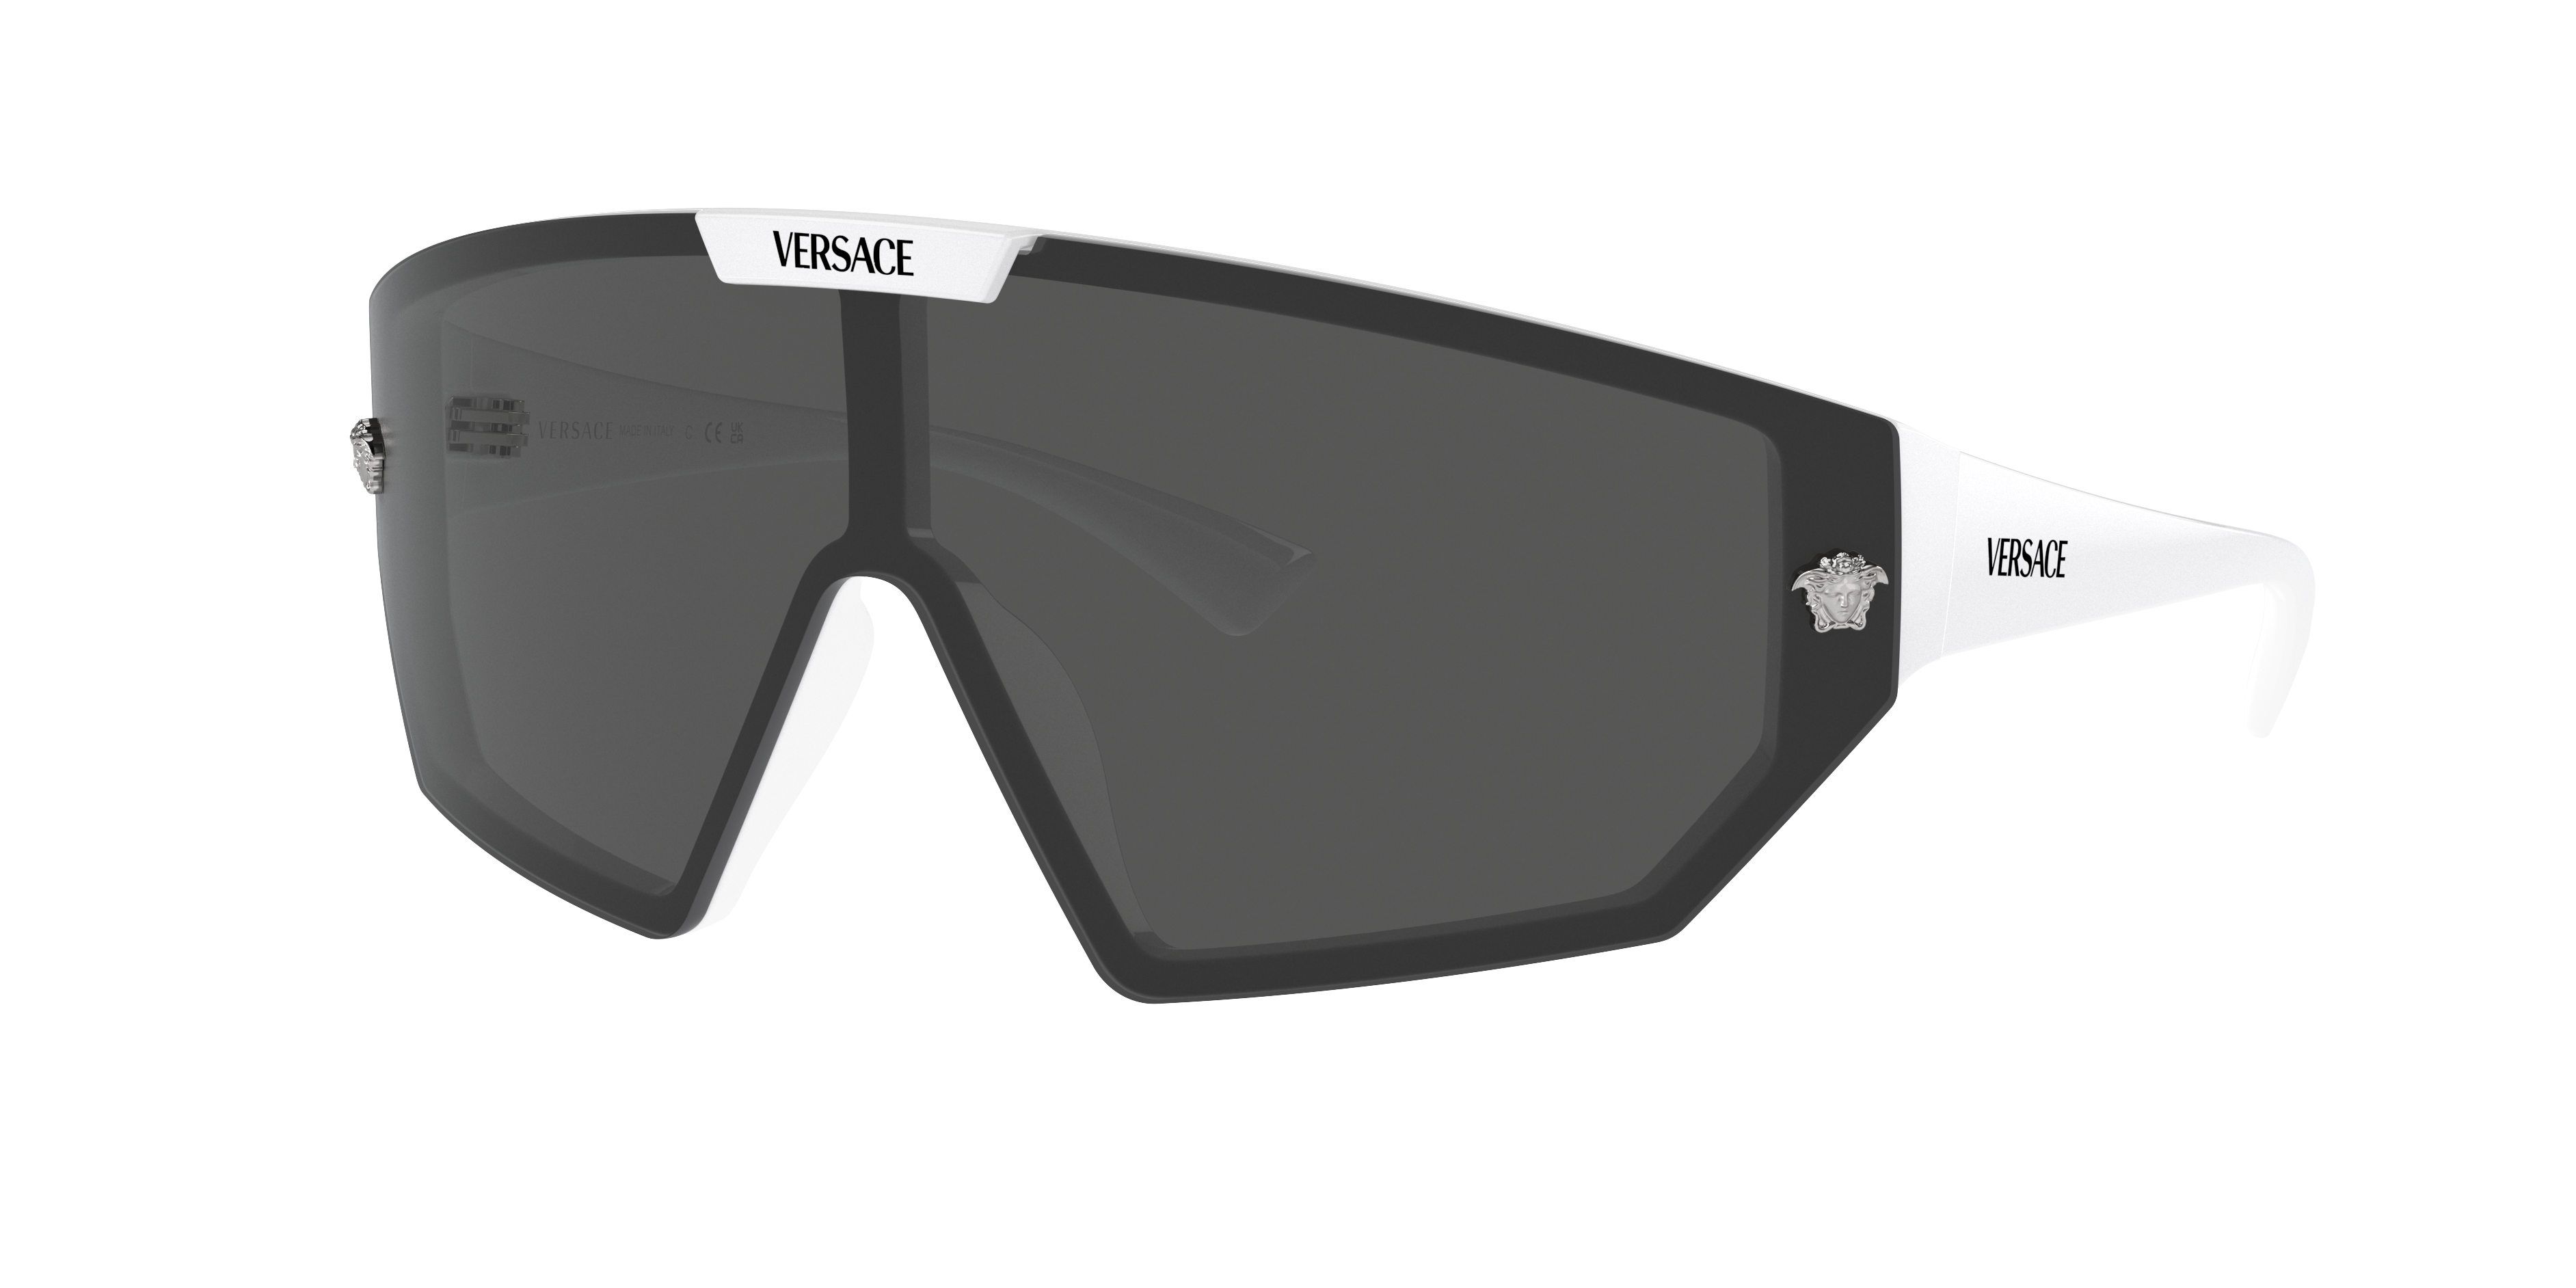 VERSACE VE4461 White - Unisex Luxury Sunglasses, Dark Grey/Mirror Silver Lens